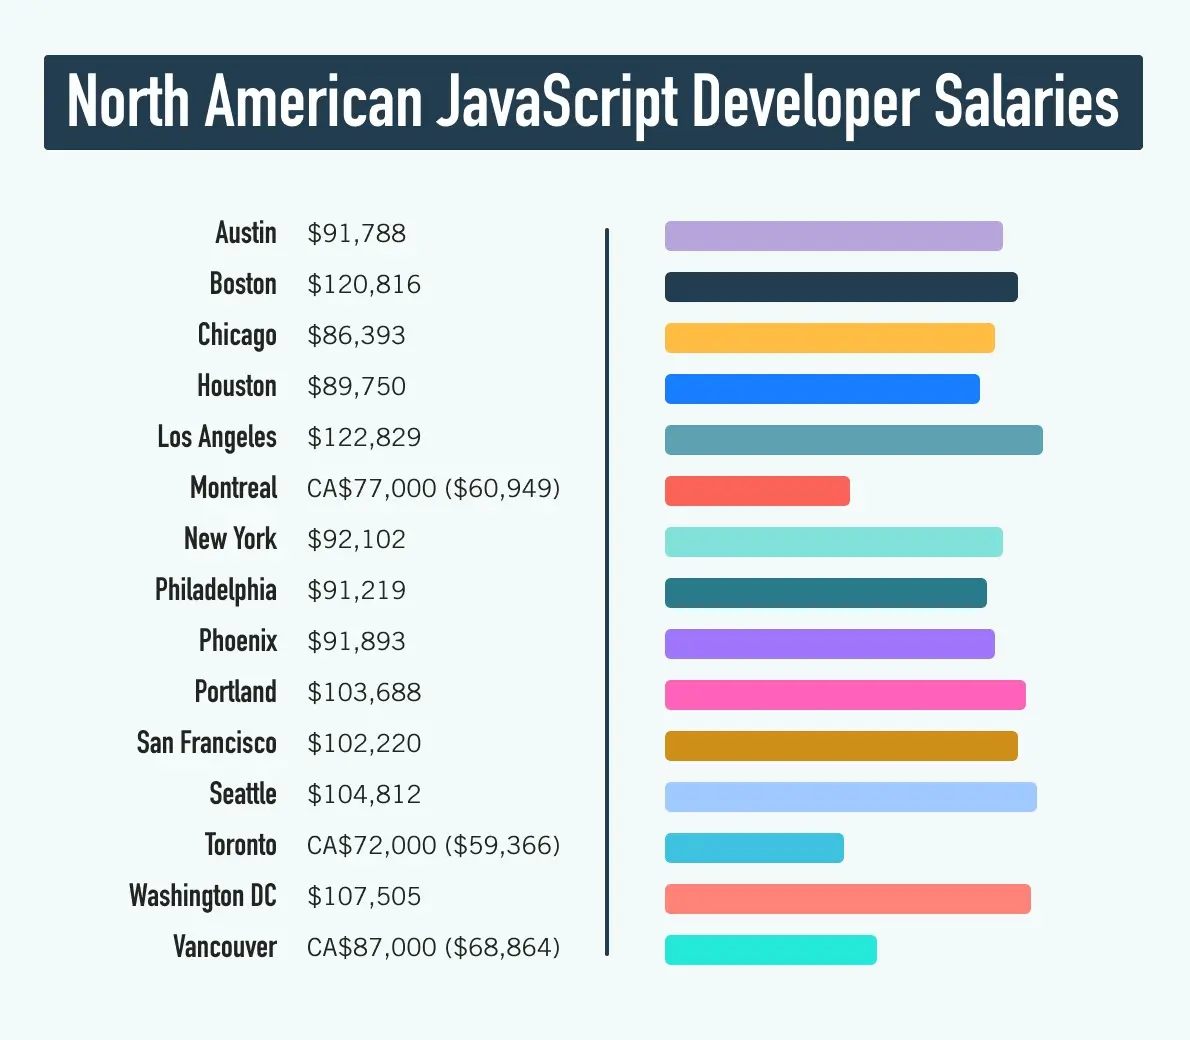 Graphic comparing JavaScript developer salaries between North American cities.